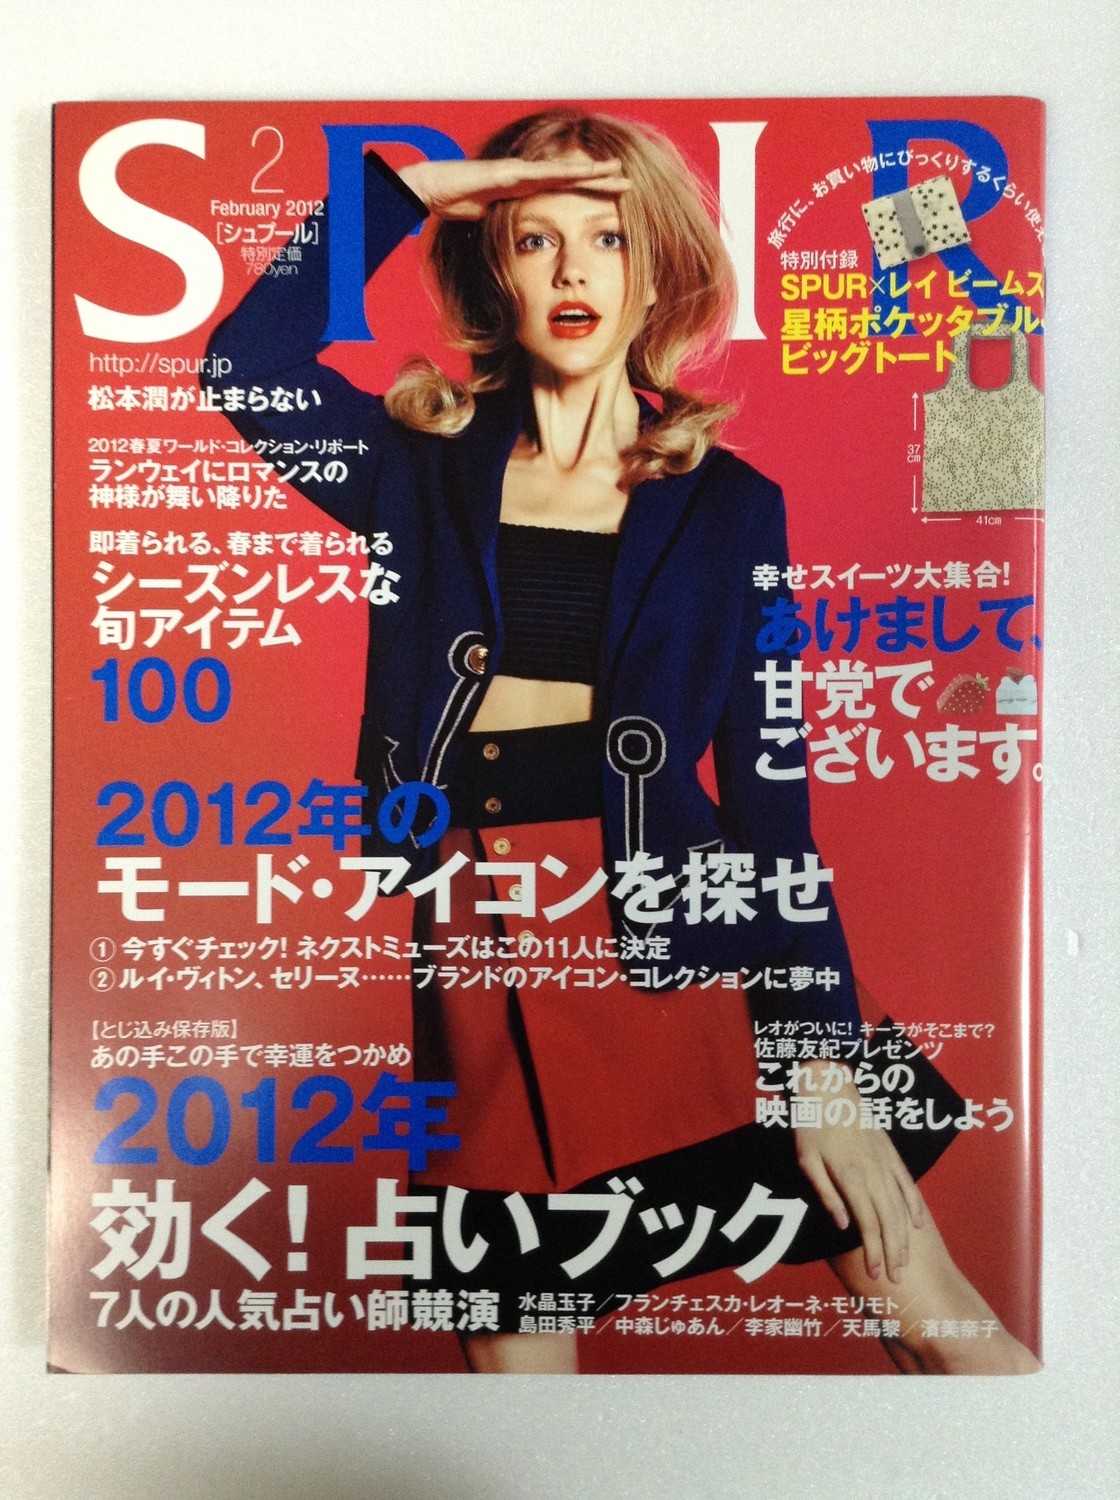 Spur Febuary 2011 Magazine featuring Matsumoto Jun